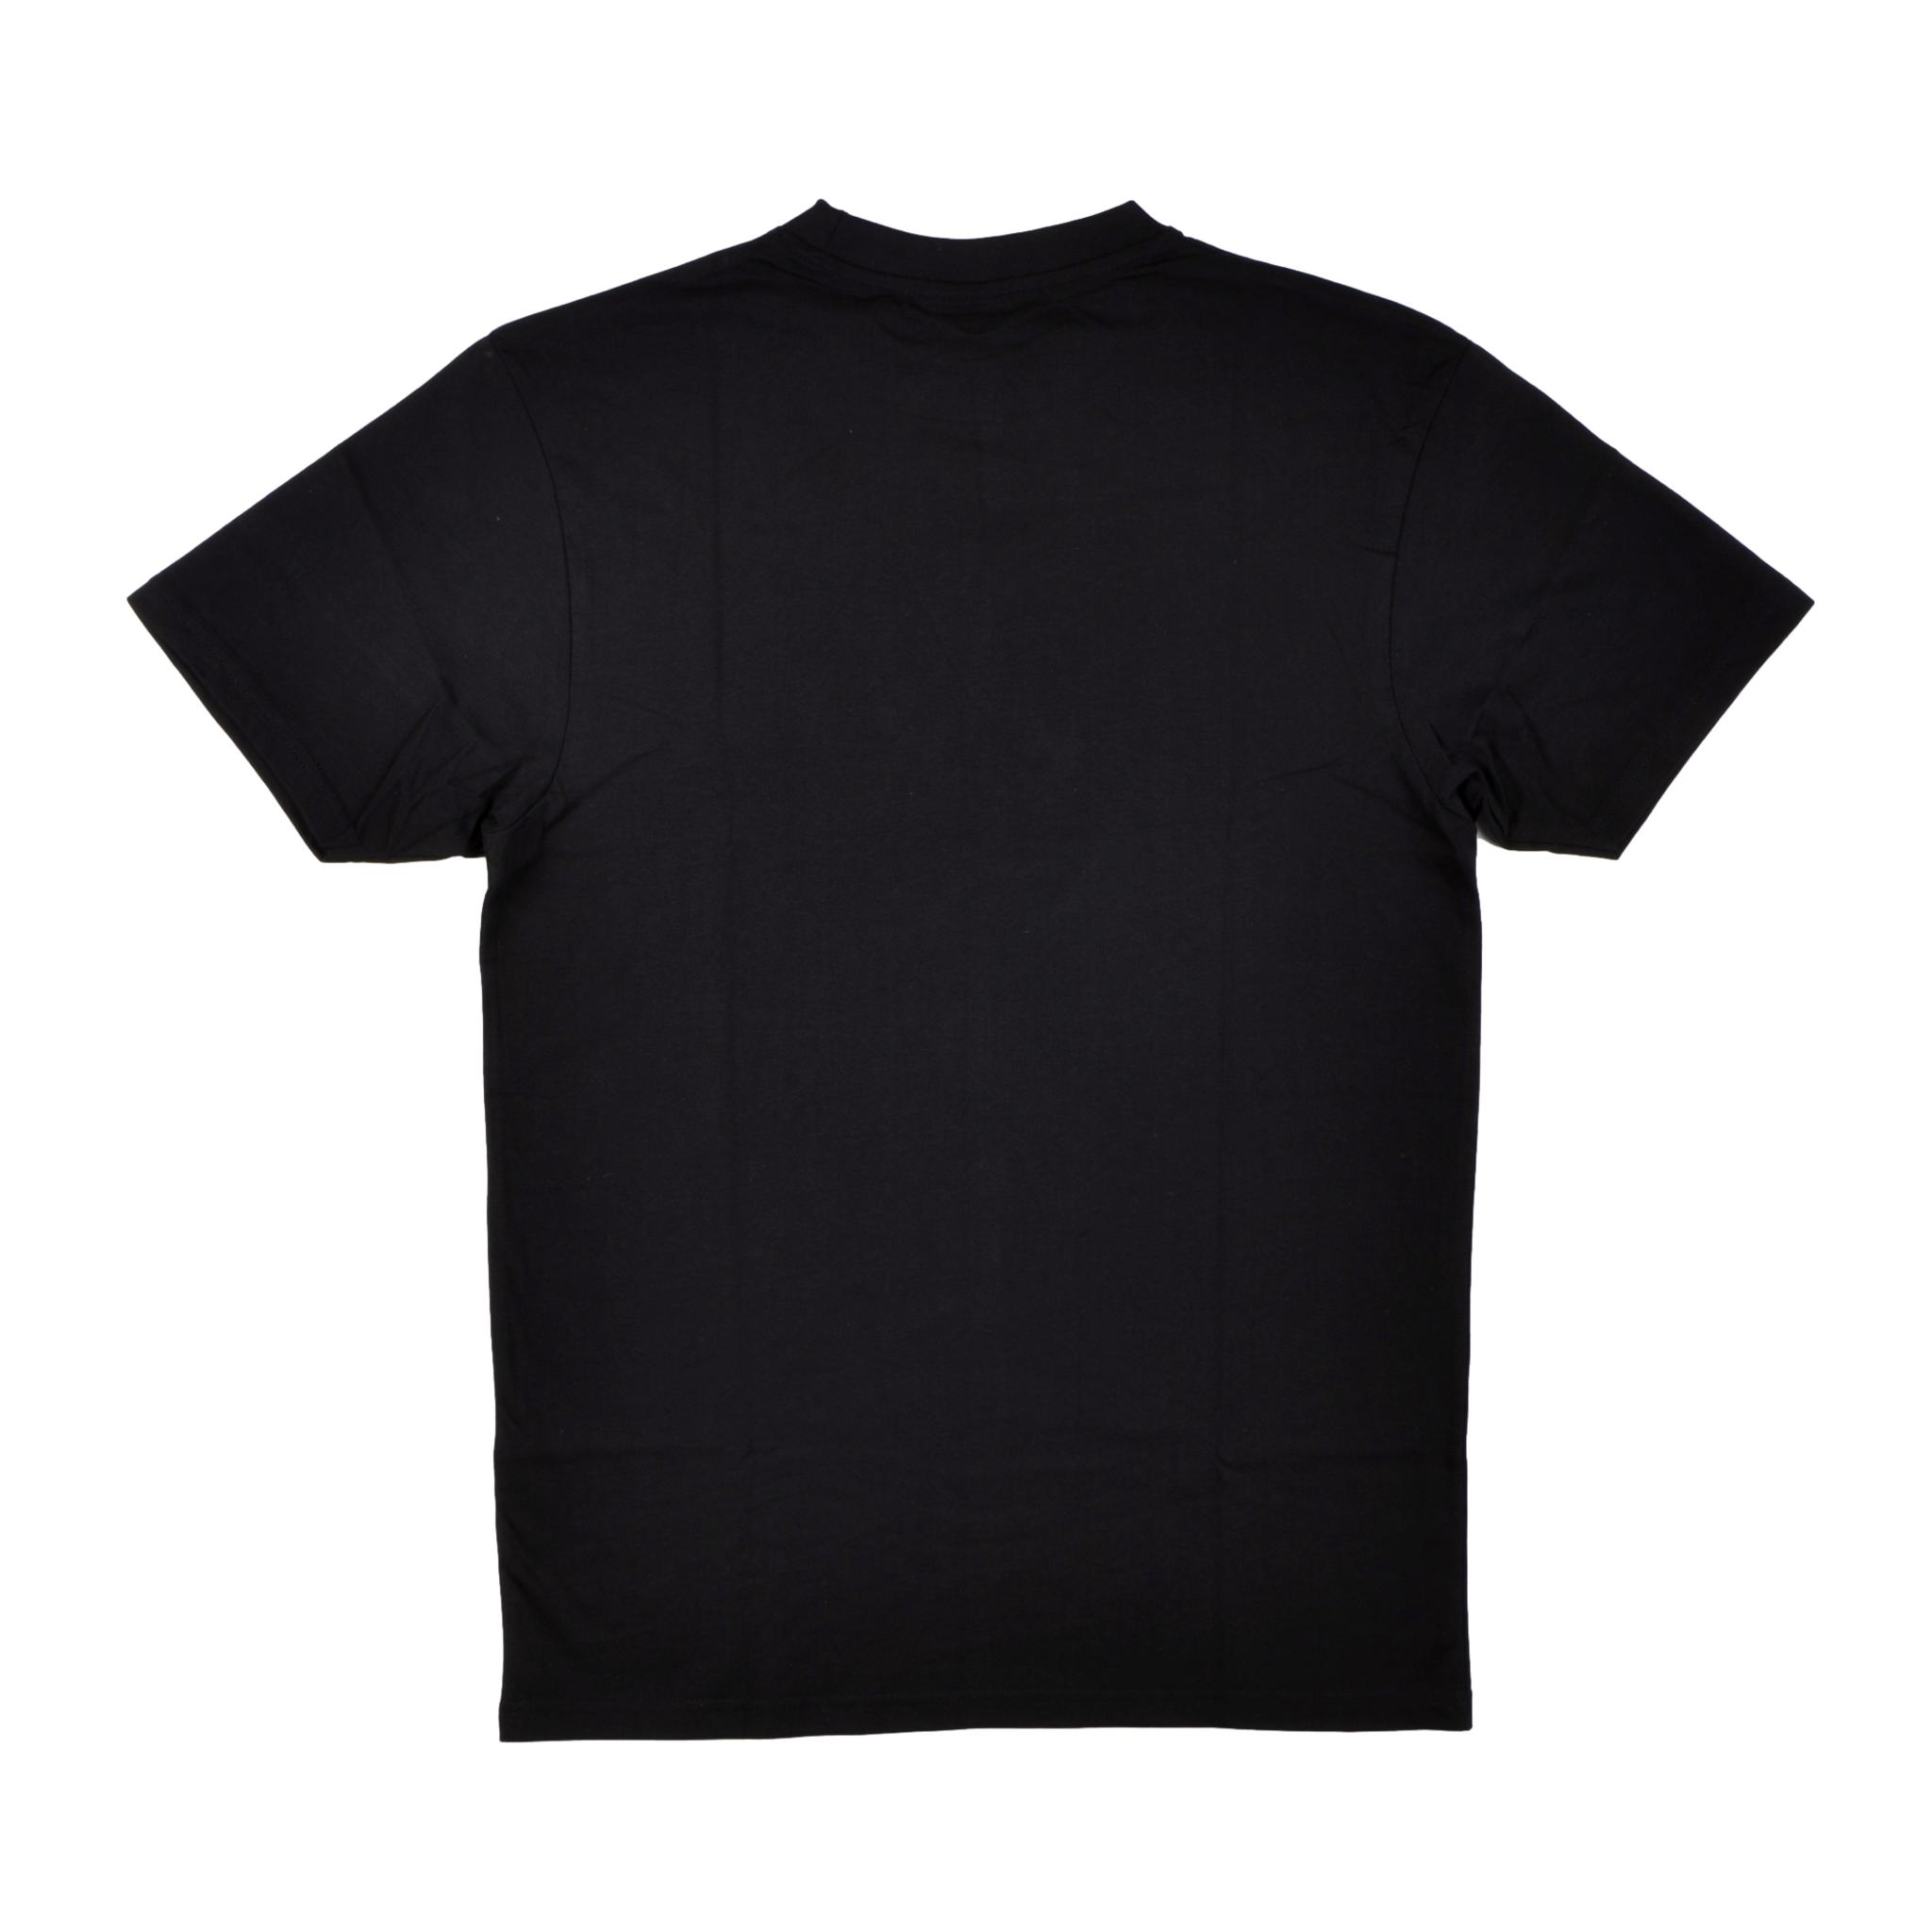 Independent Spanning T Shirt Black